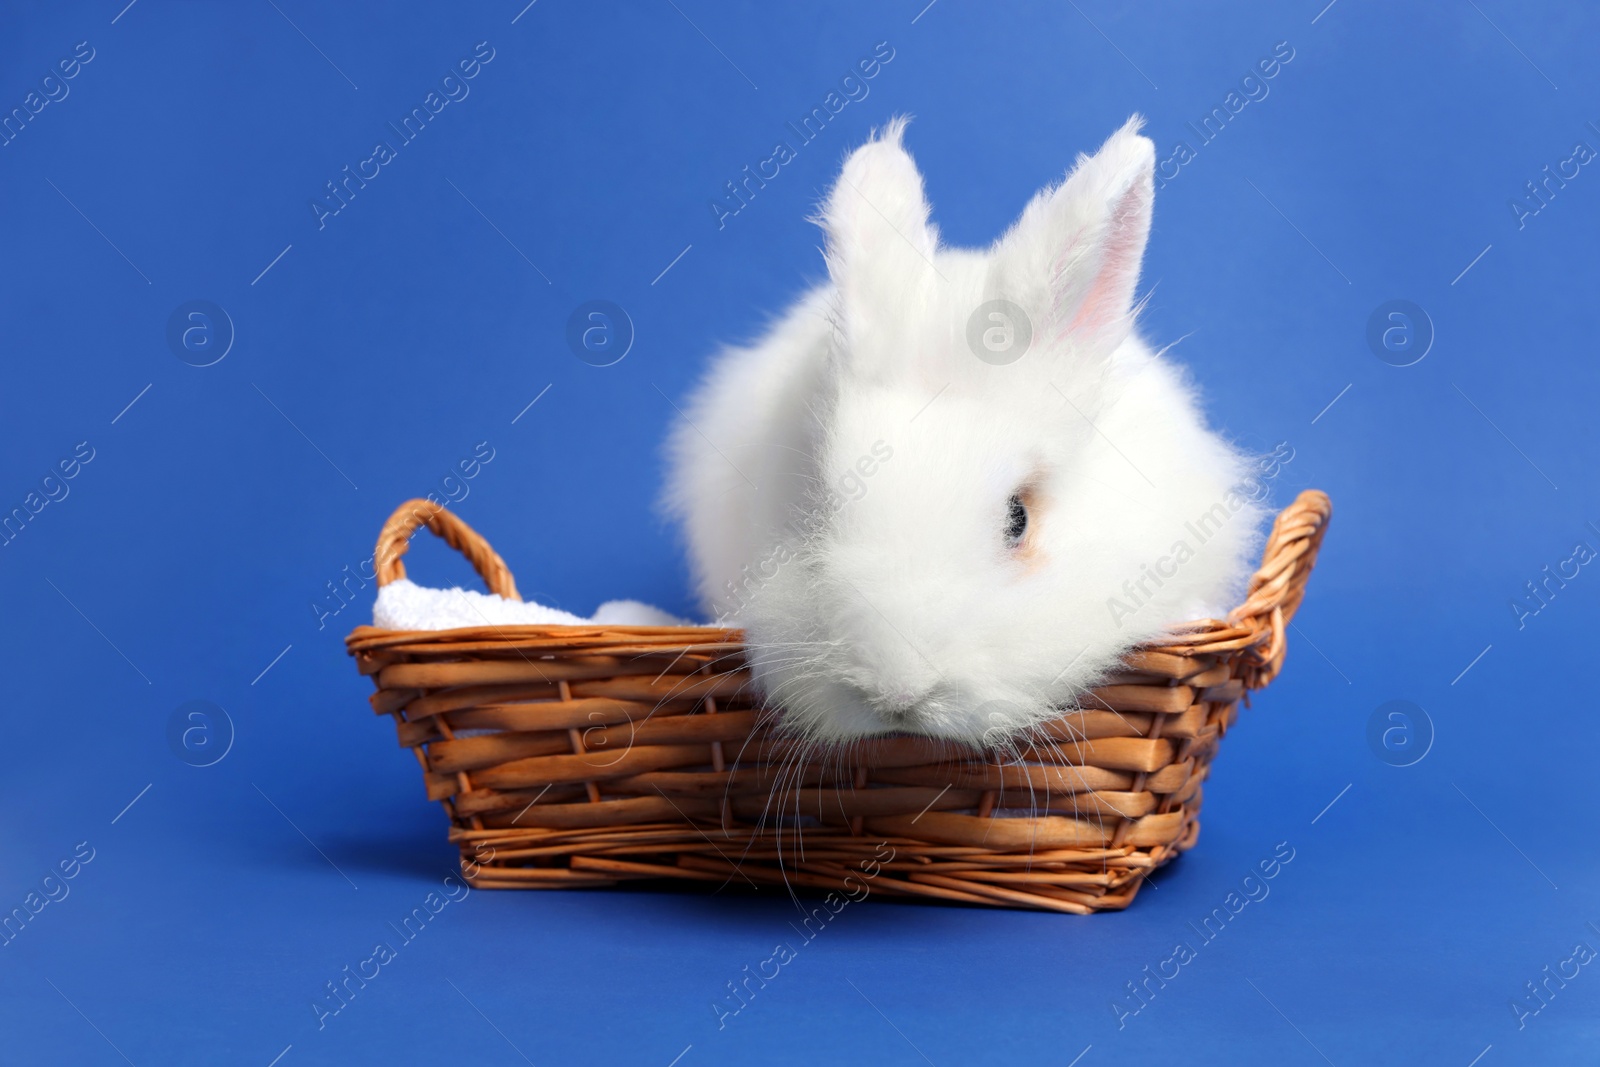 Photo of Fluffy white rabbit in wicker basket on blue background. Cute pet